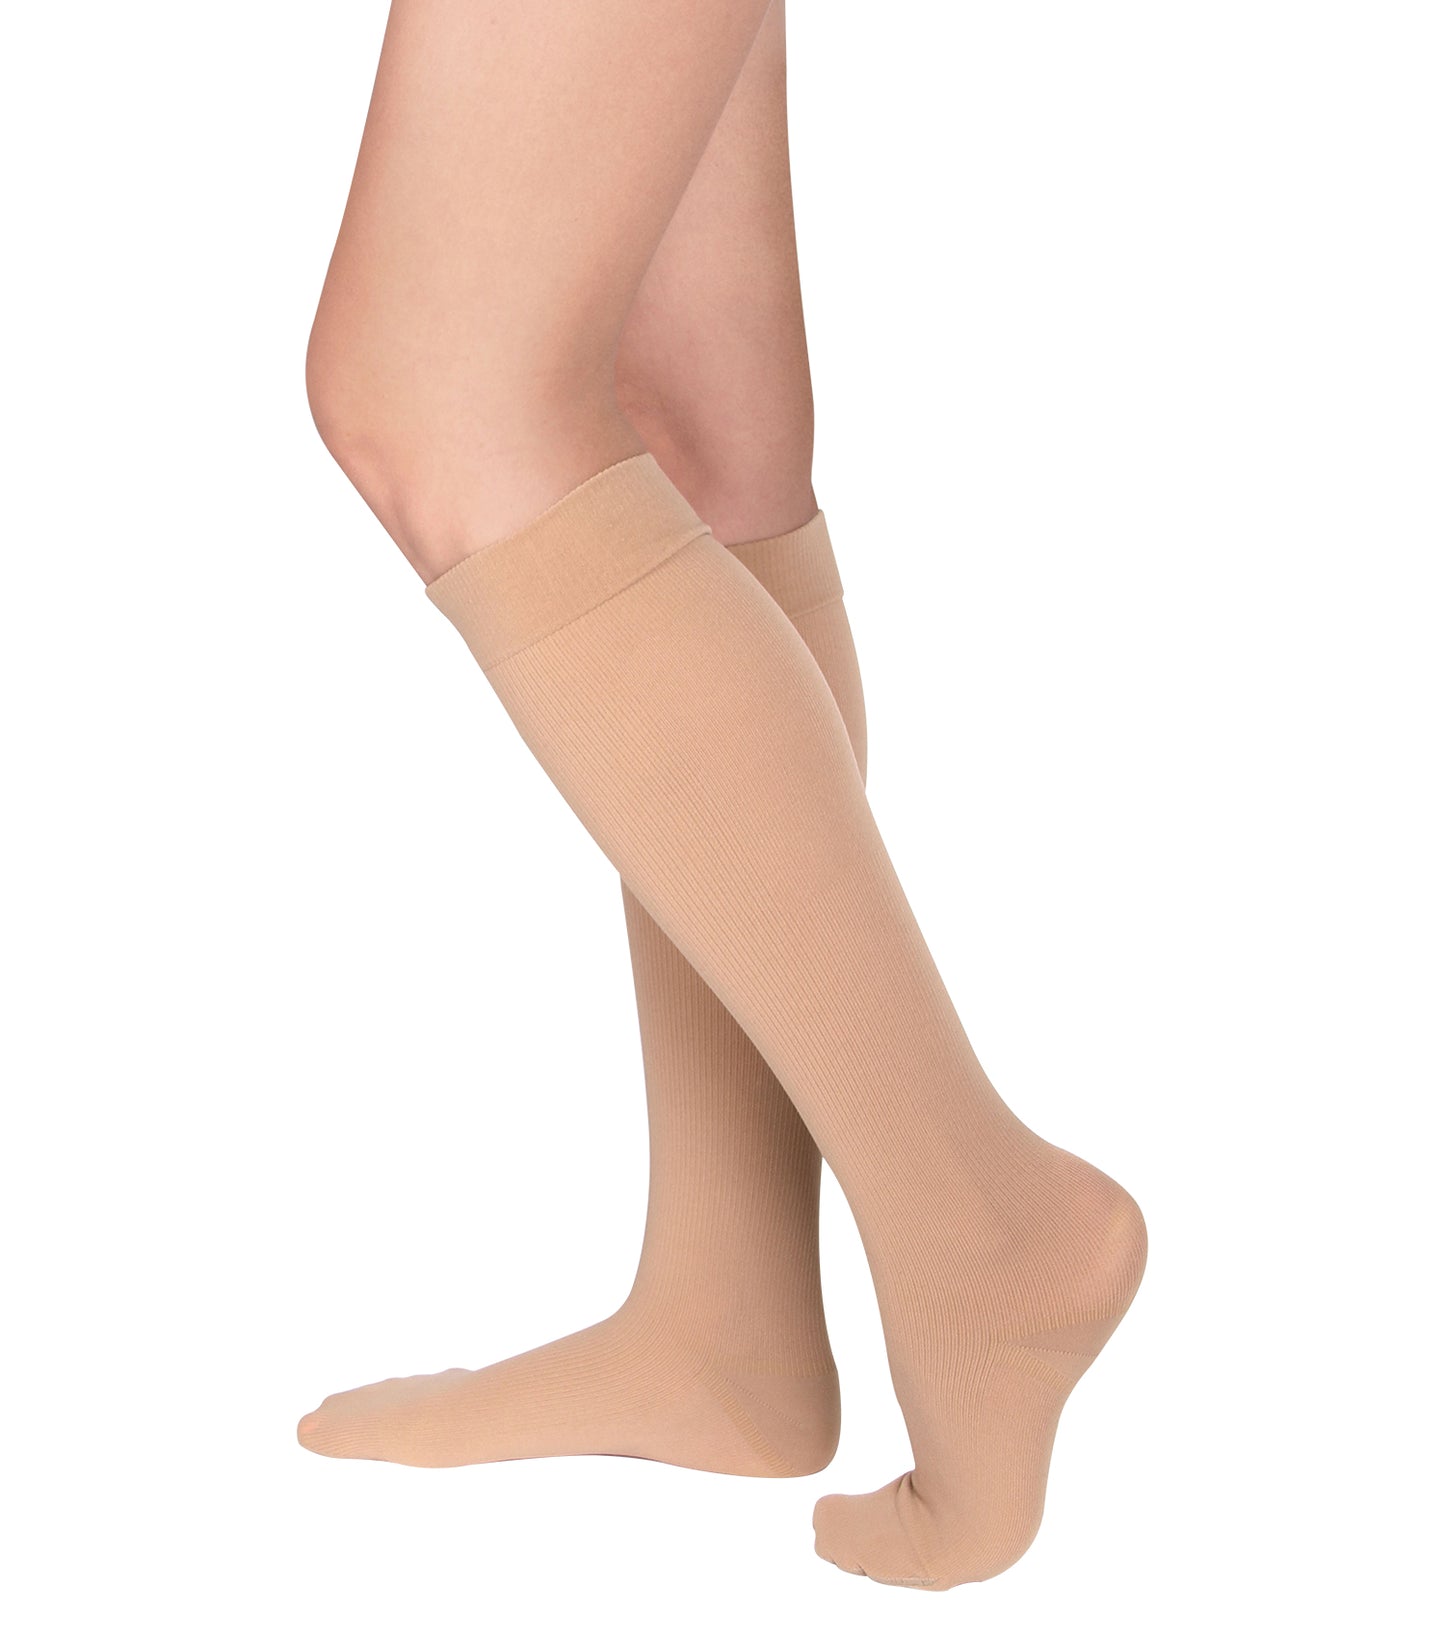 SNUG360 Knee High Compression Socks, 20-30 mmHg, Closed Toe